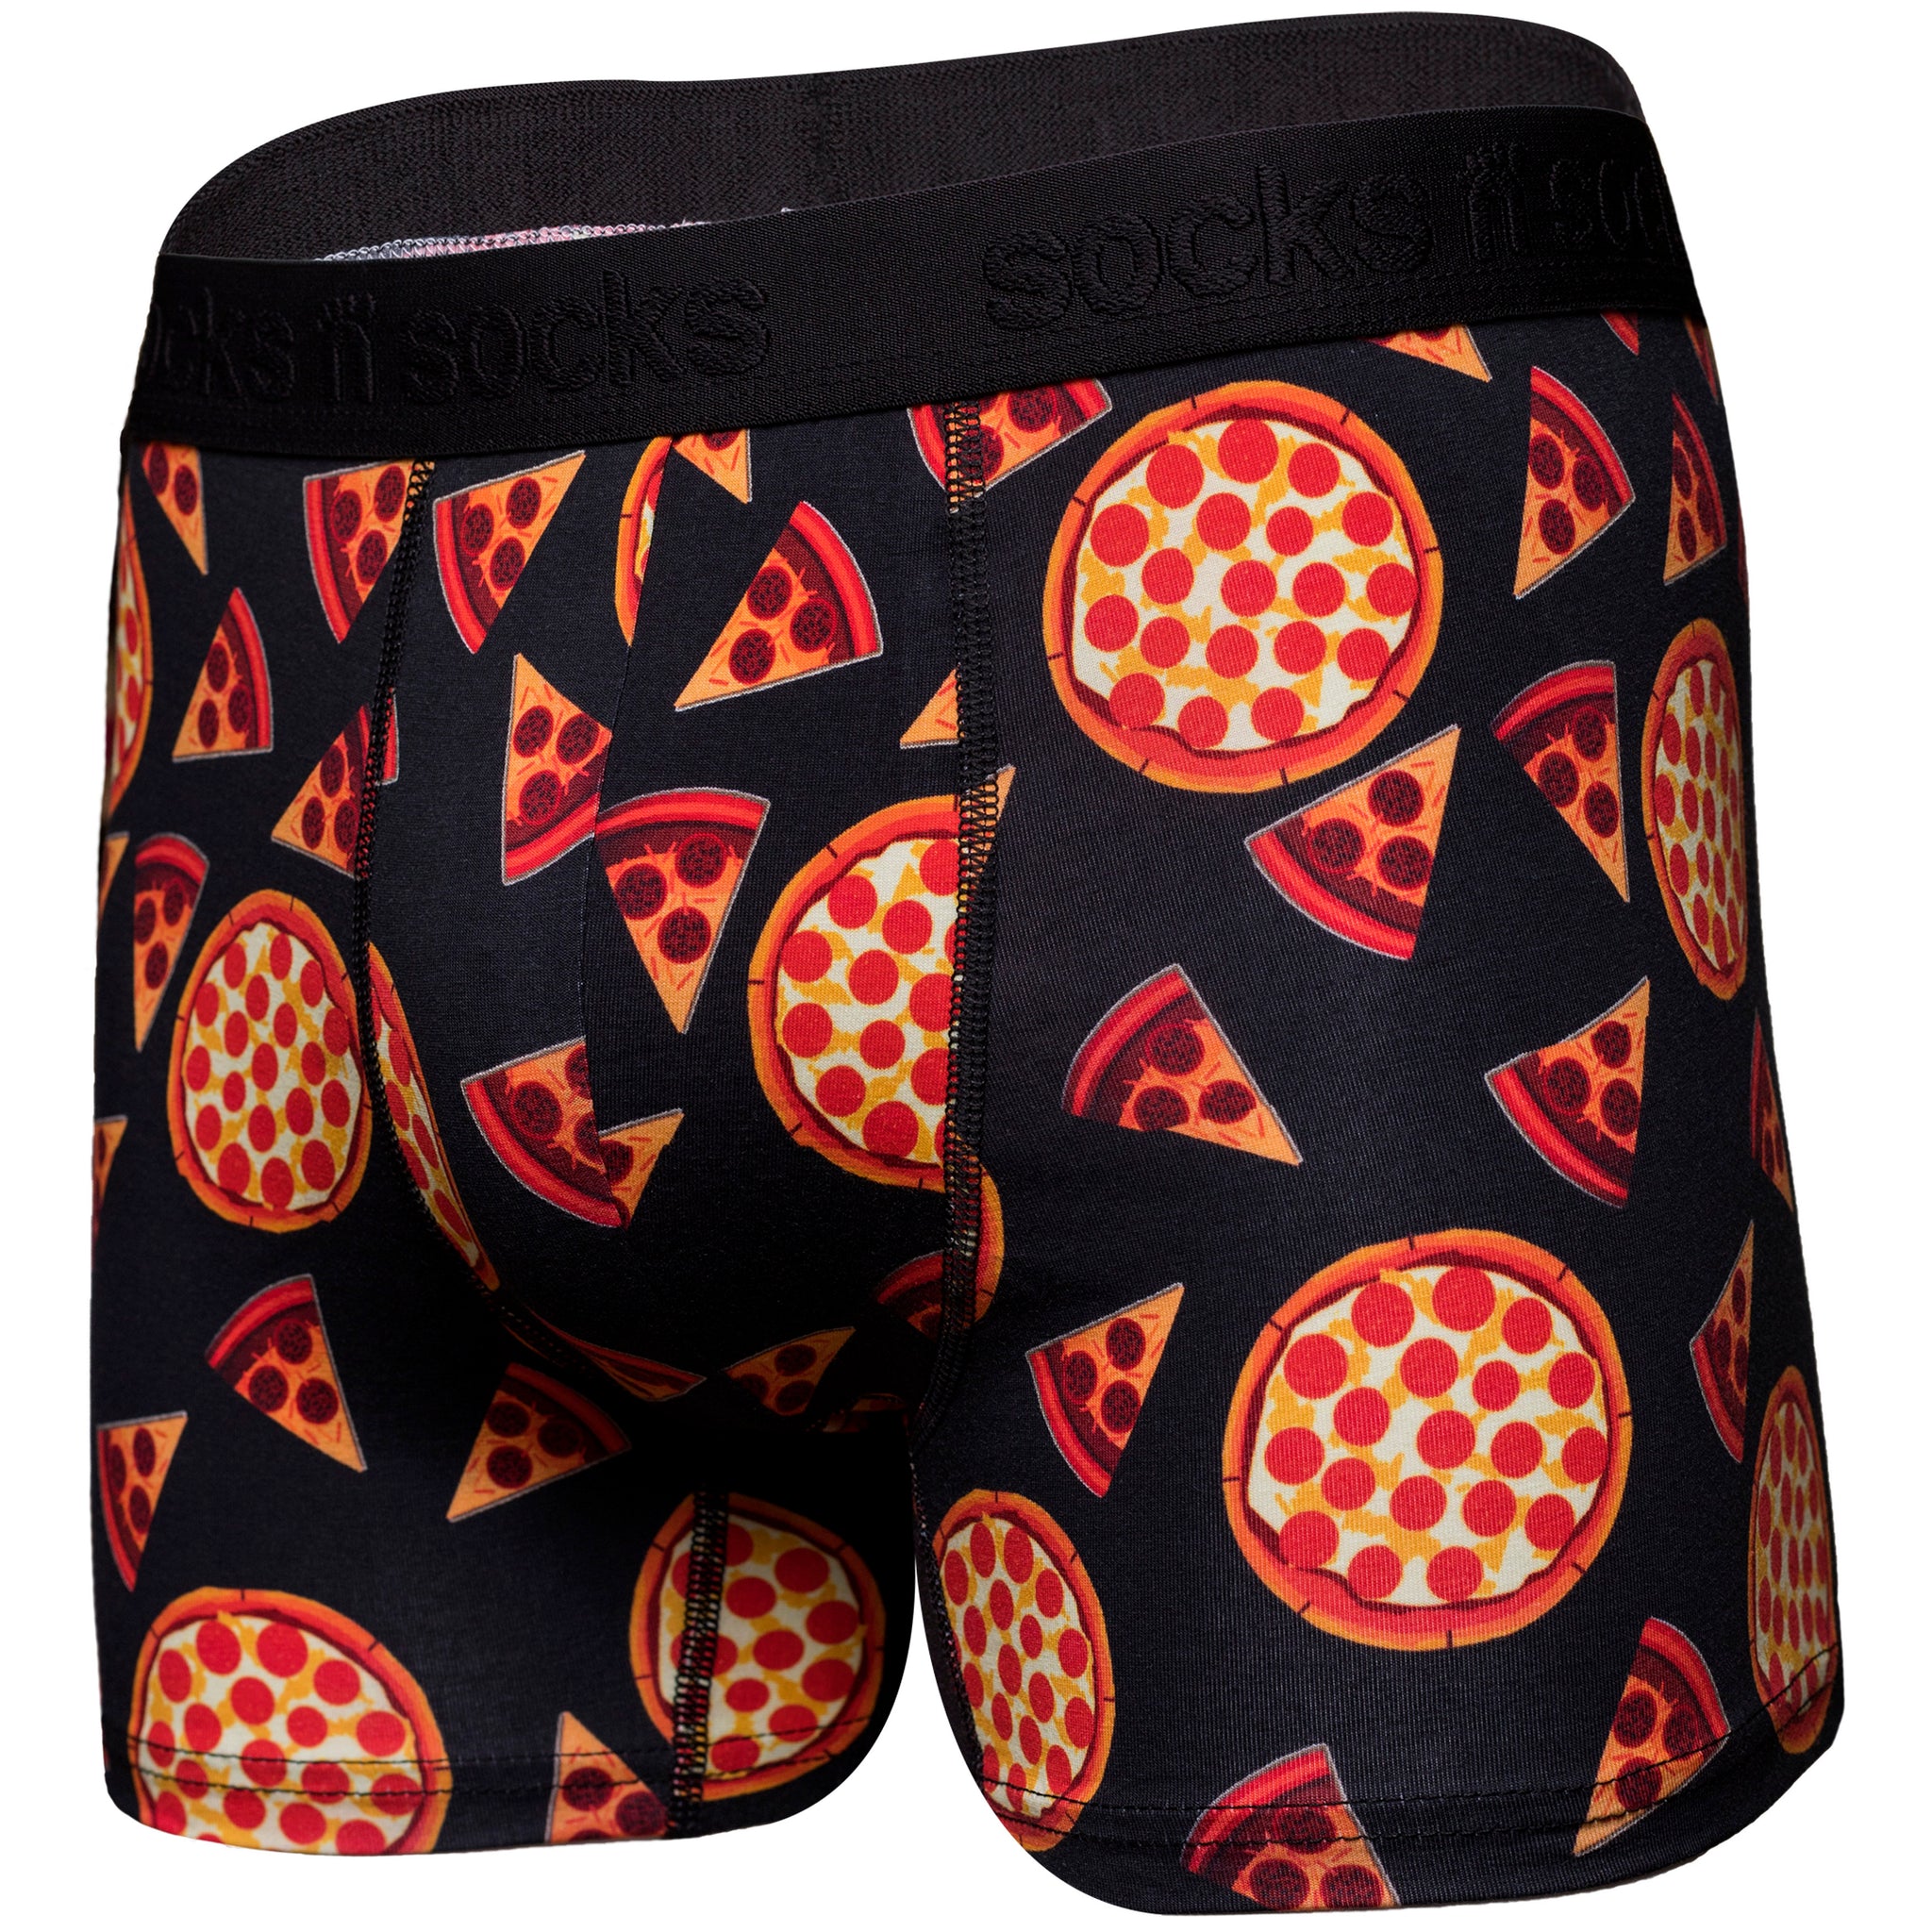 Pepperoni Pizza Party Food Men Underwear Boxer Briefs Shorts